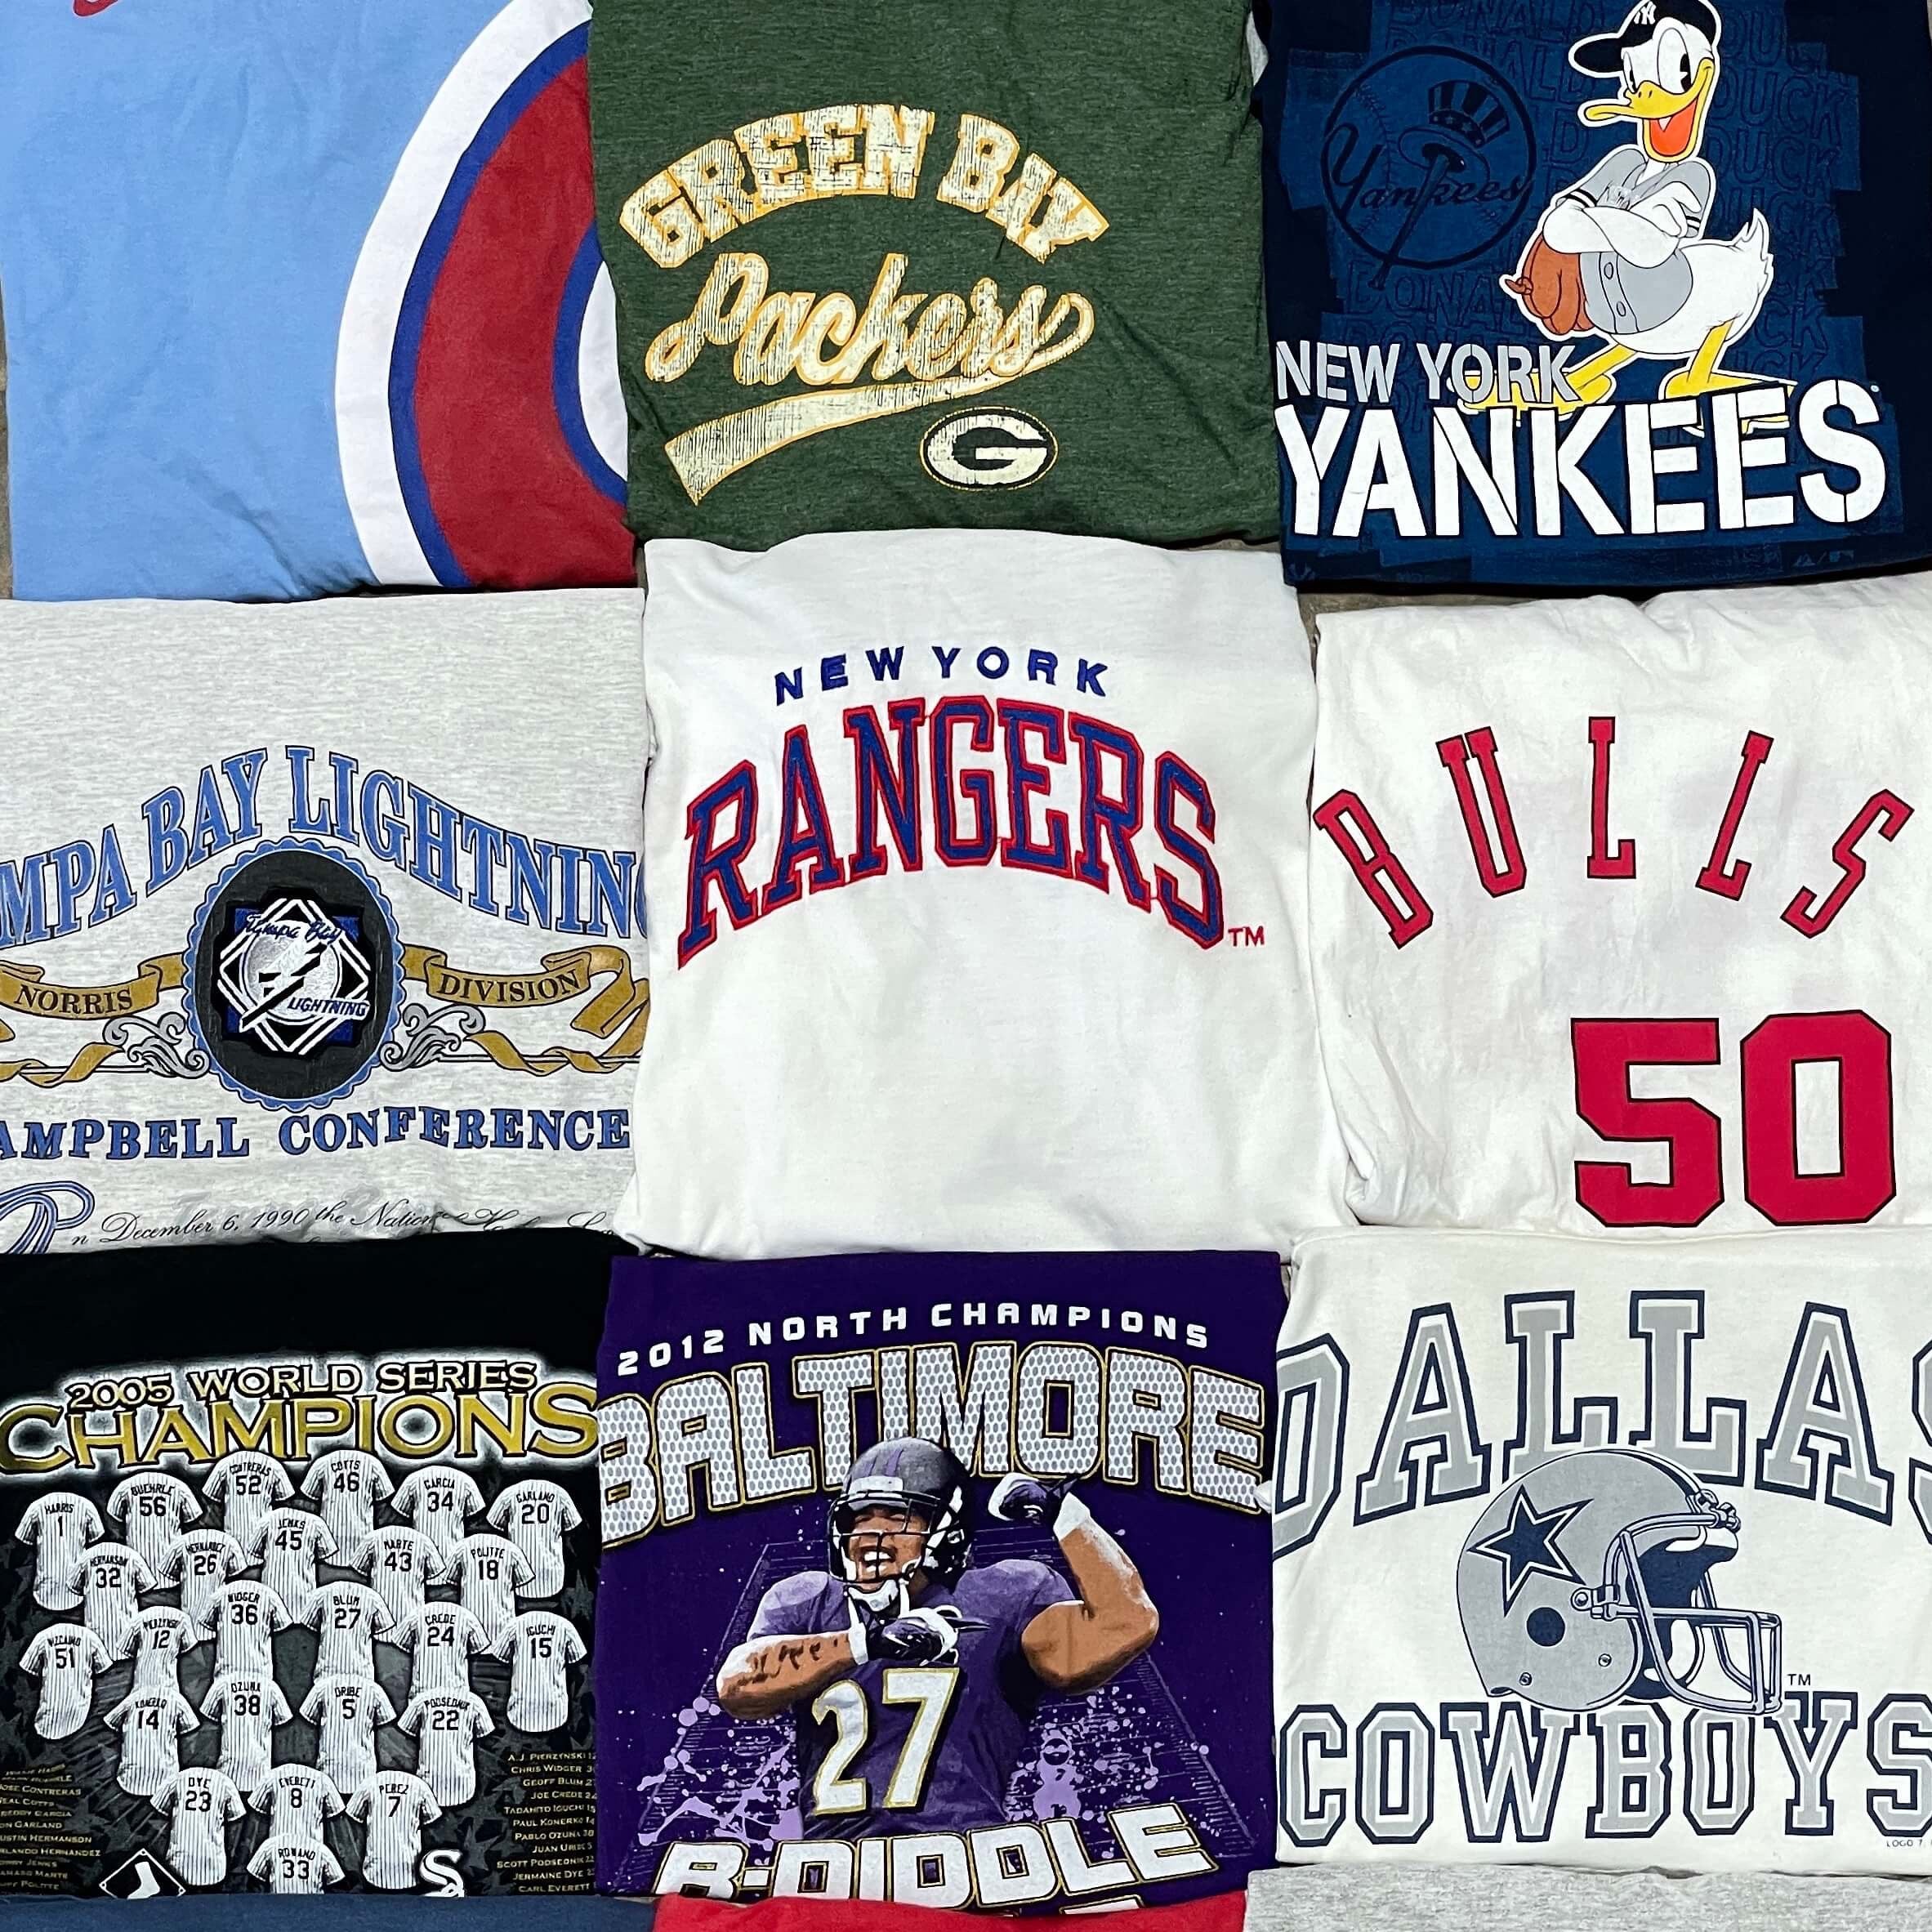 Vintage Cleveland Indians T-shirt size L – SLCT Stock